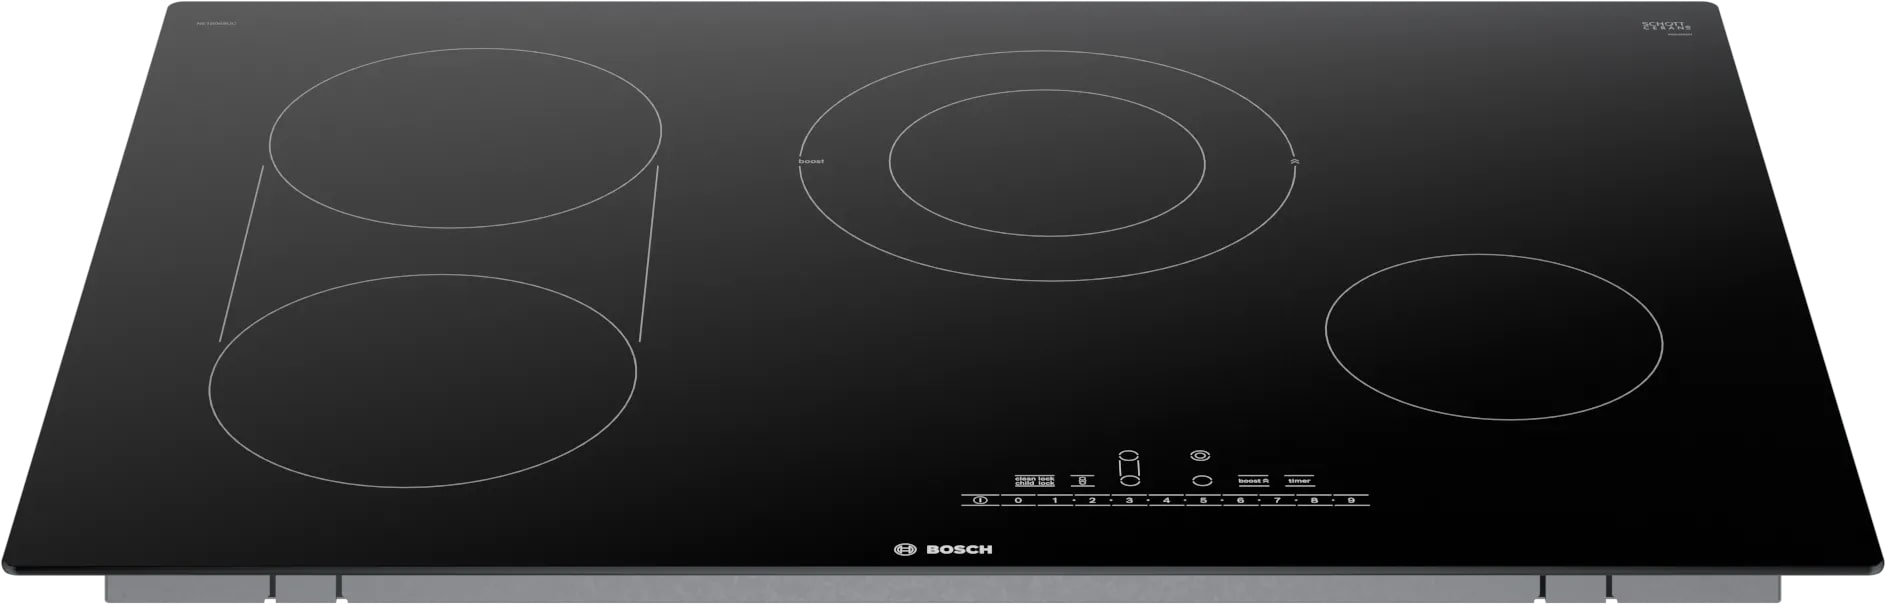 Bosch - 31 inch wide Electric Cooktop in Black - NET8069UC